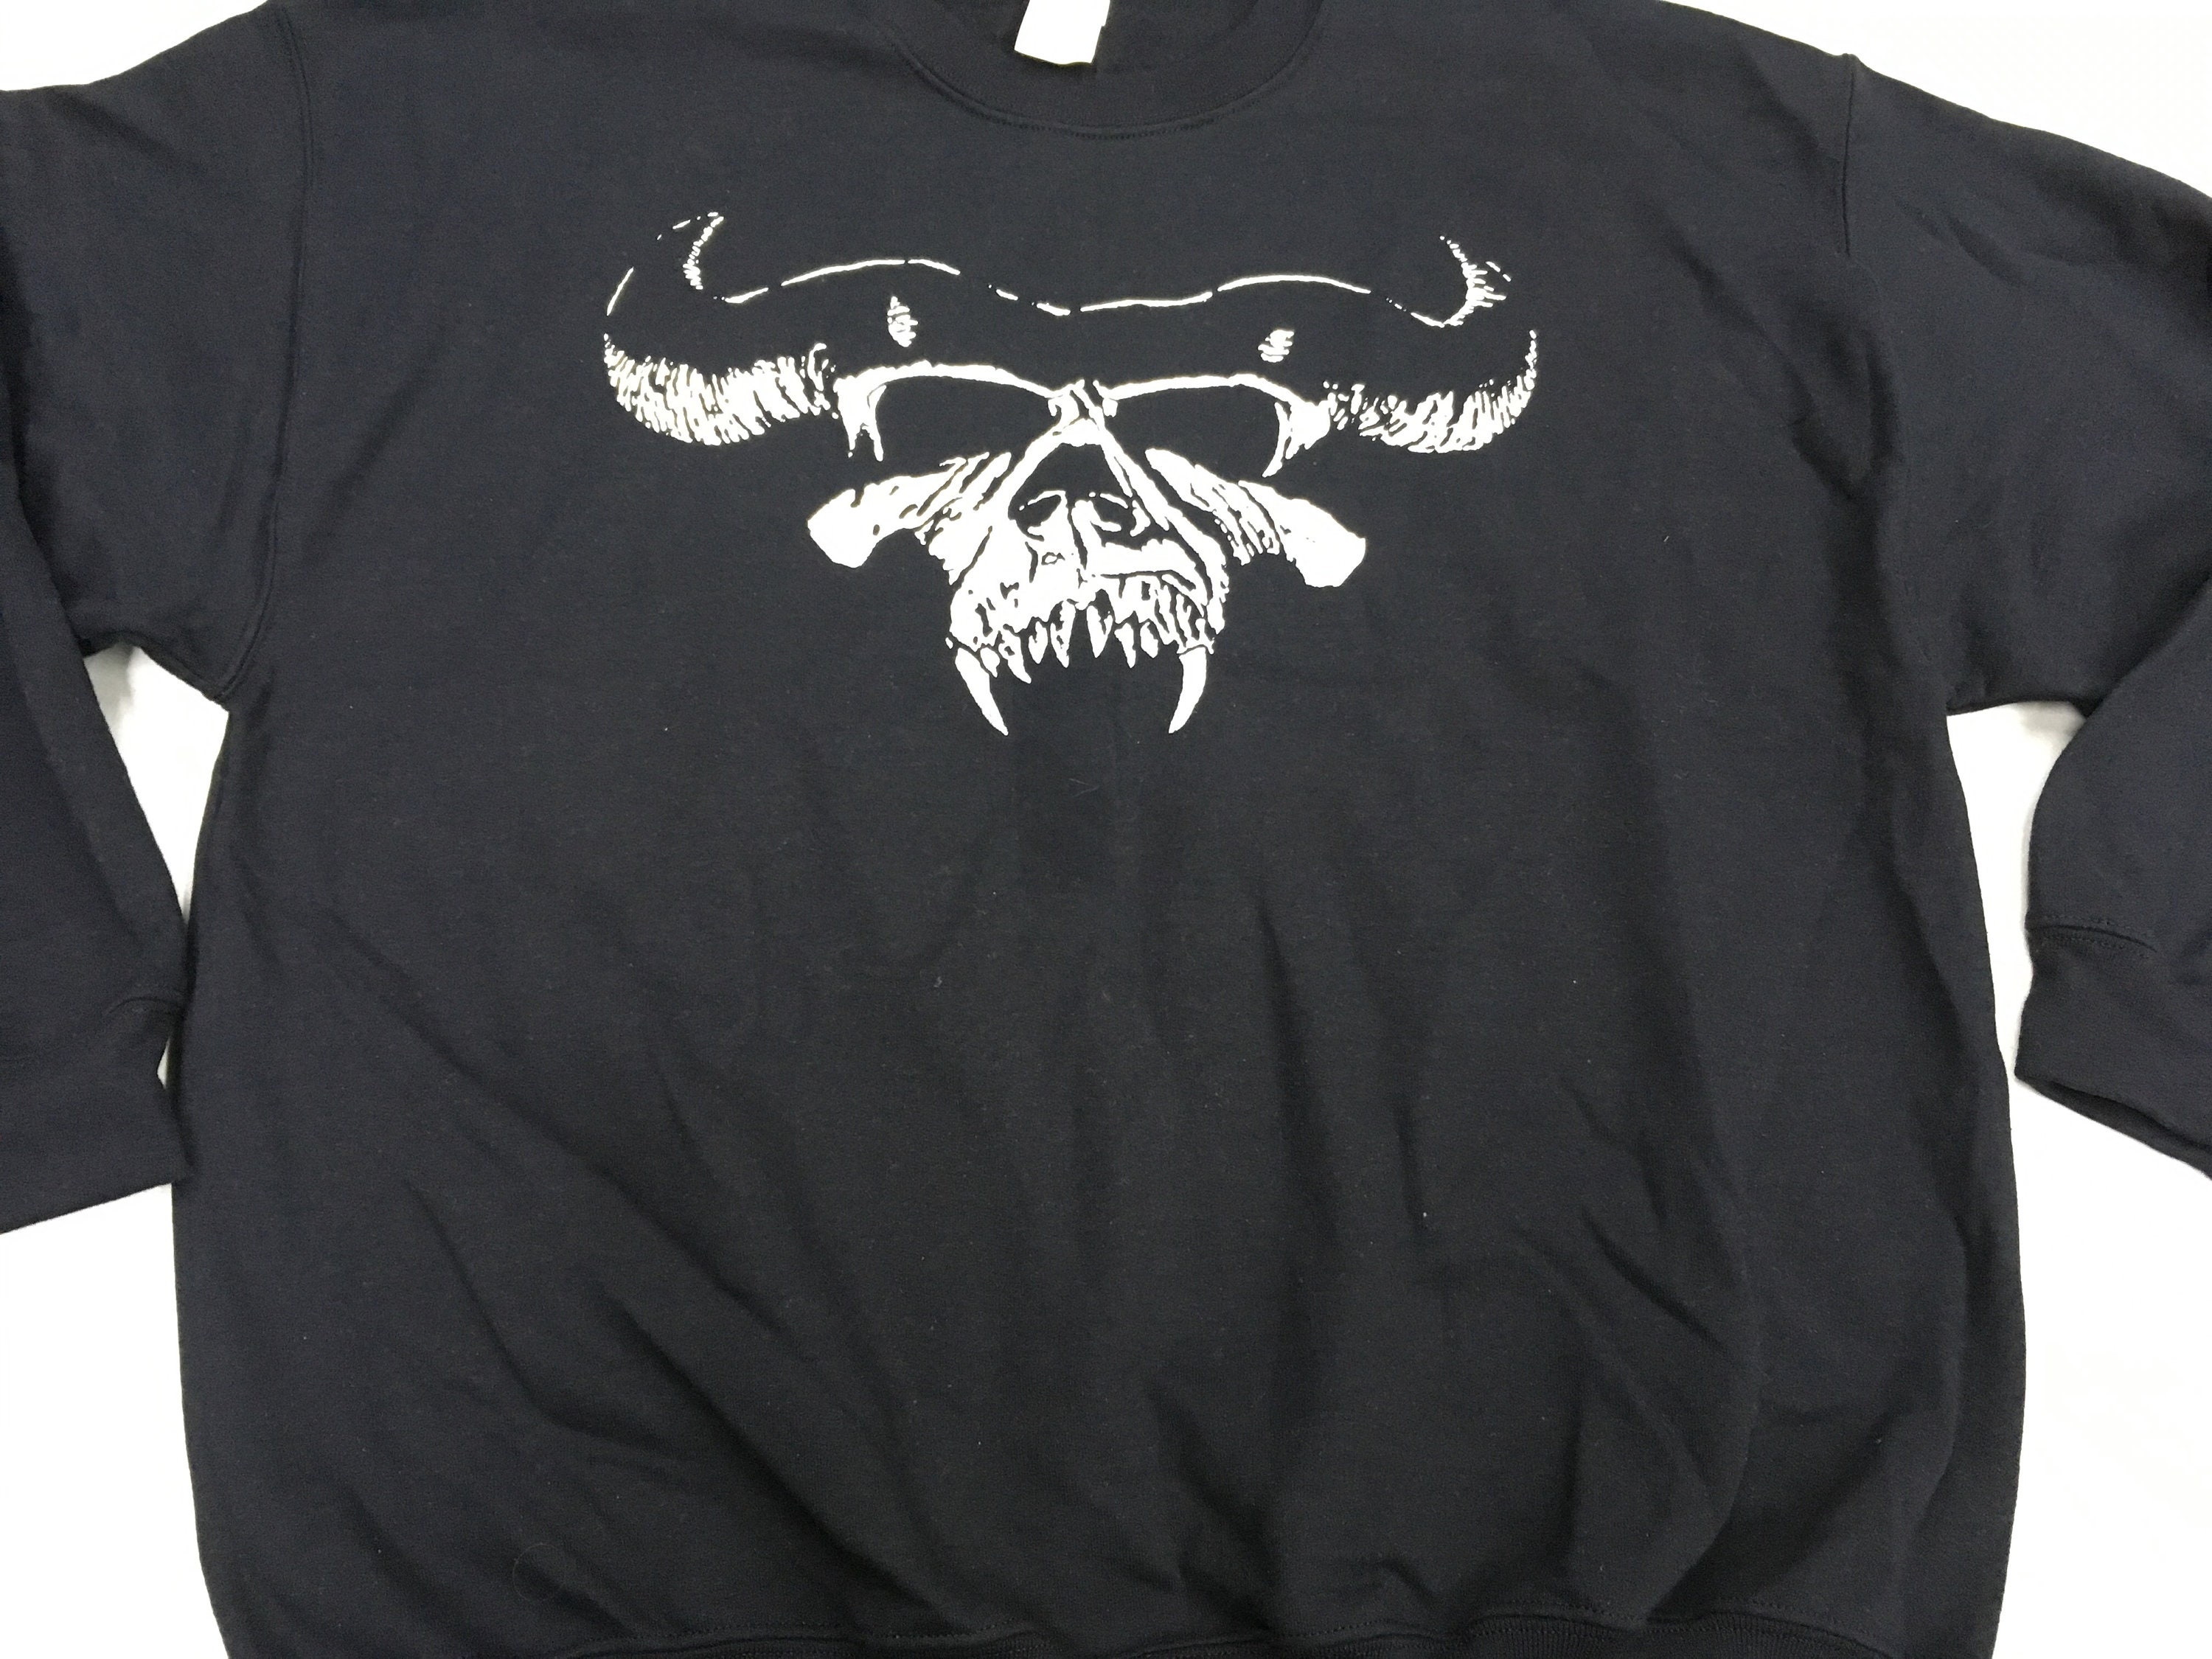 Samhain/danzig Skull Shirt | Etsy